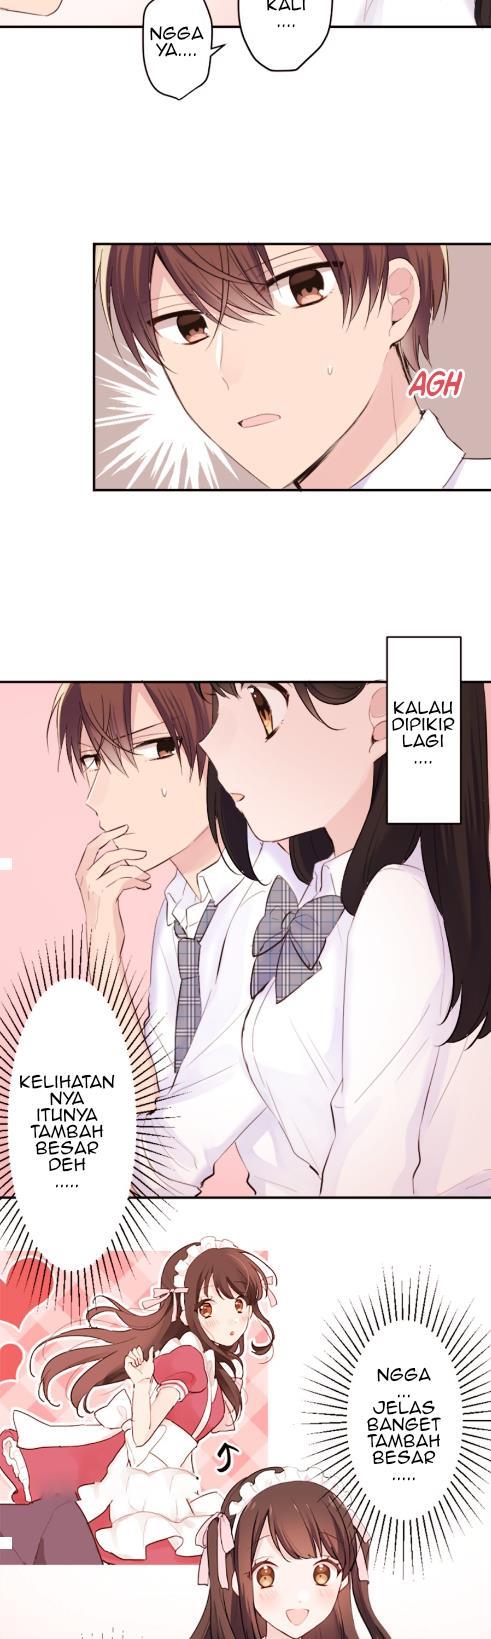 Class Maid (Shimamura) Chapter 36